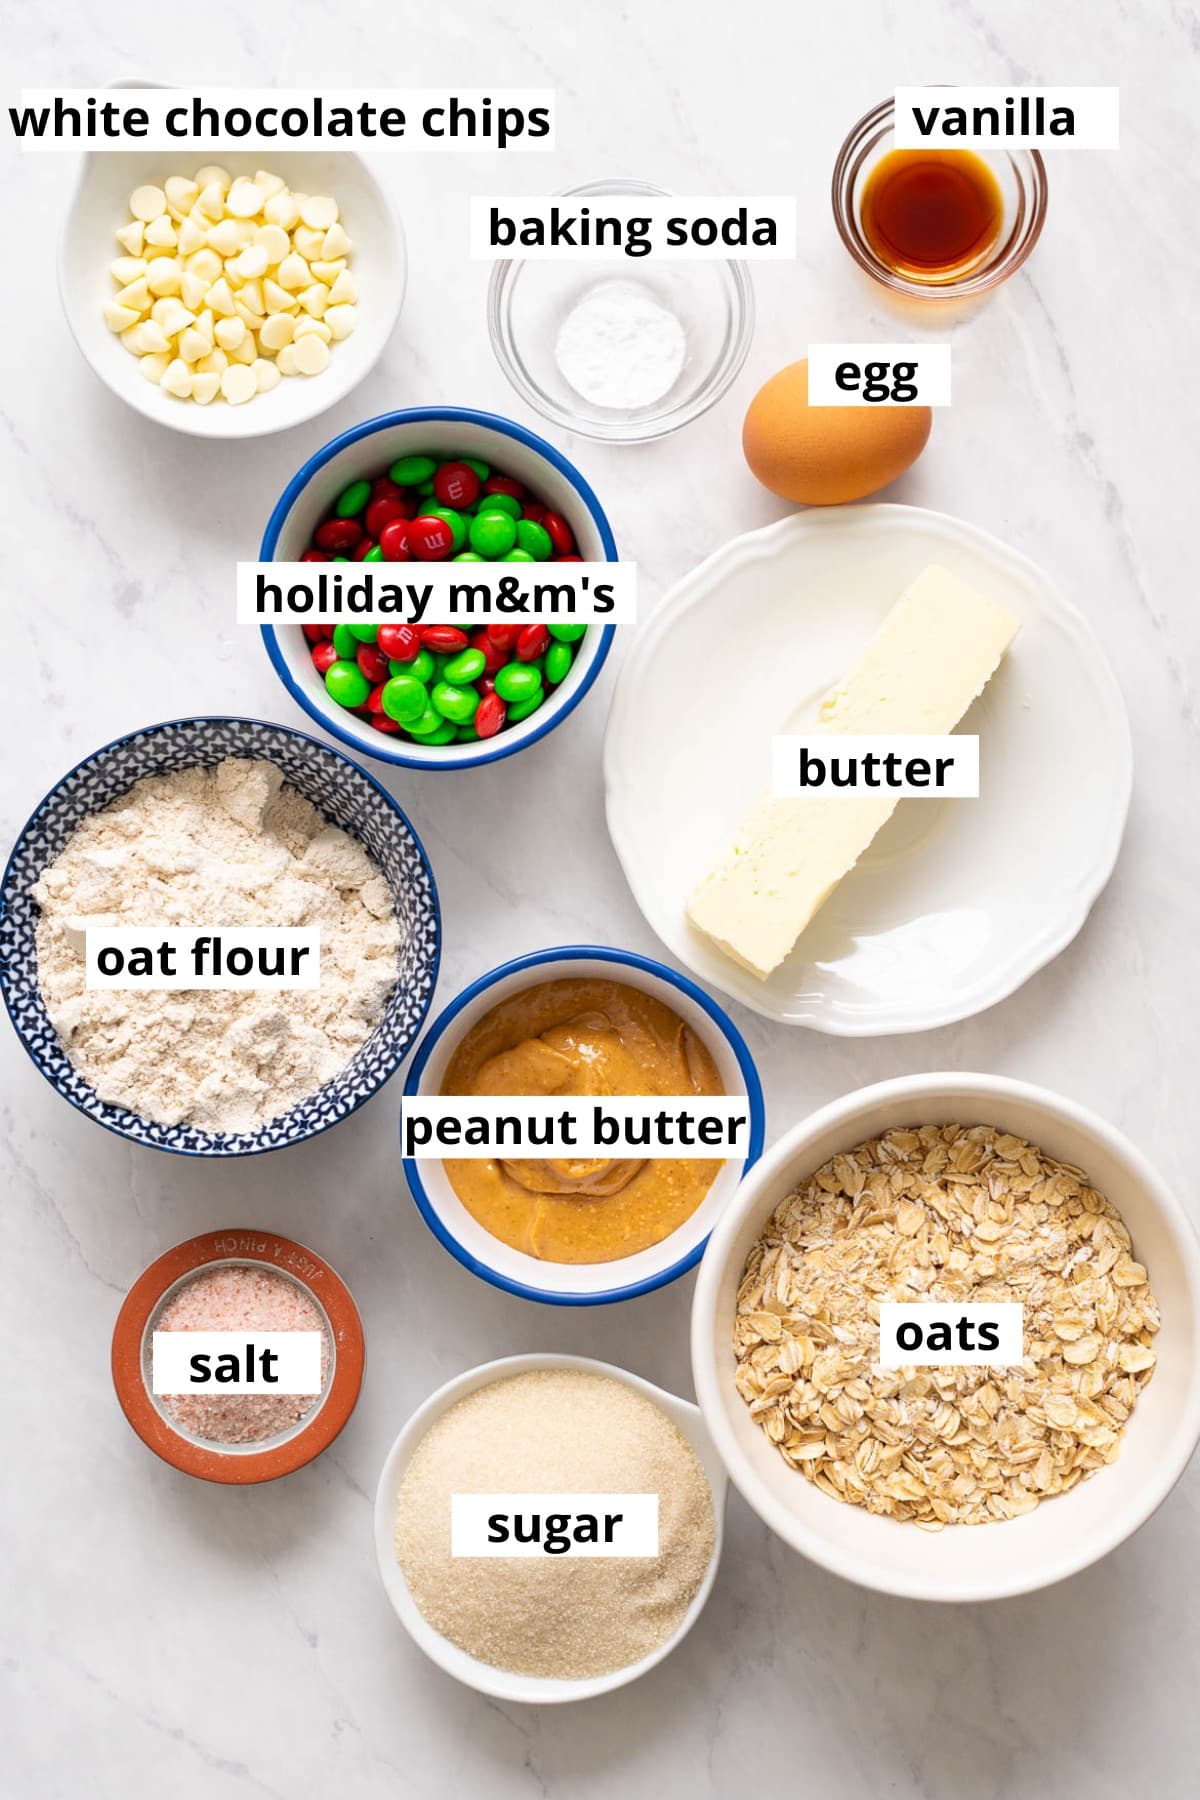 Oat flour, oats, peanut butter, sugar, butter, vanilla extract, baking soda, egg, white chocolate chips, holiday m&m's, salt.